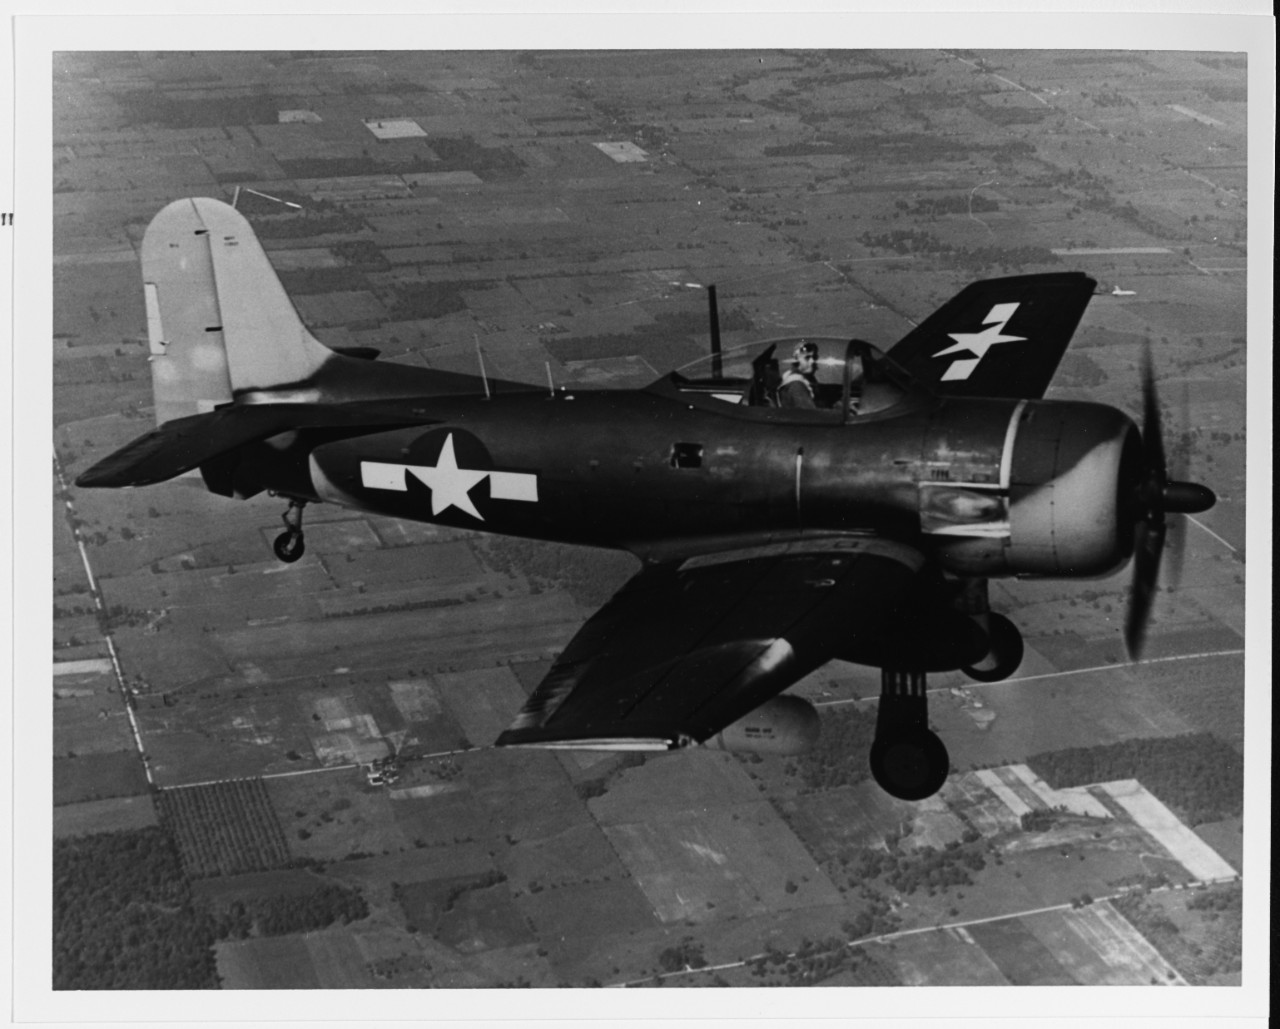 Curtiss SC-2 "Seahawks"